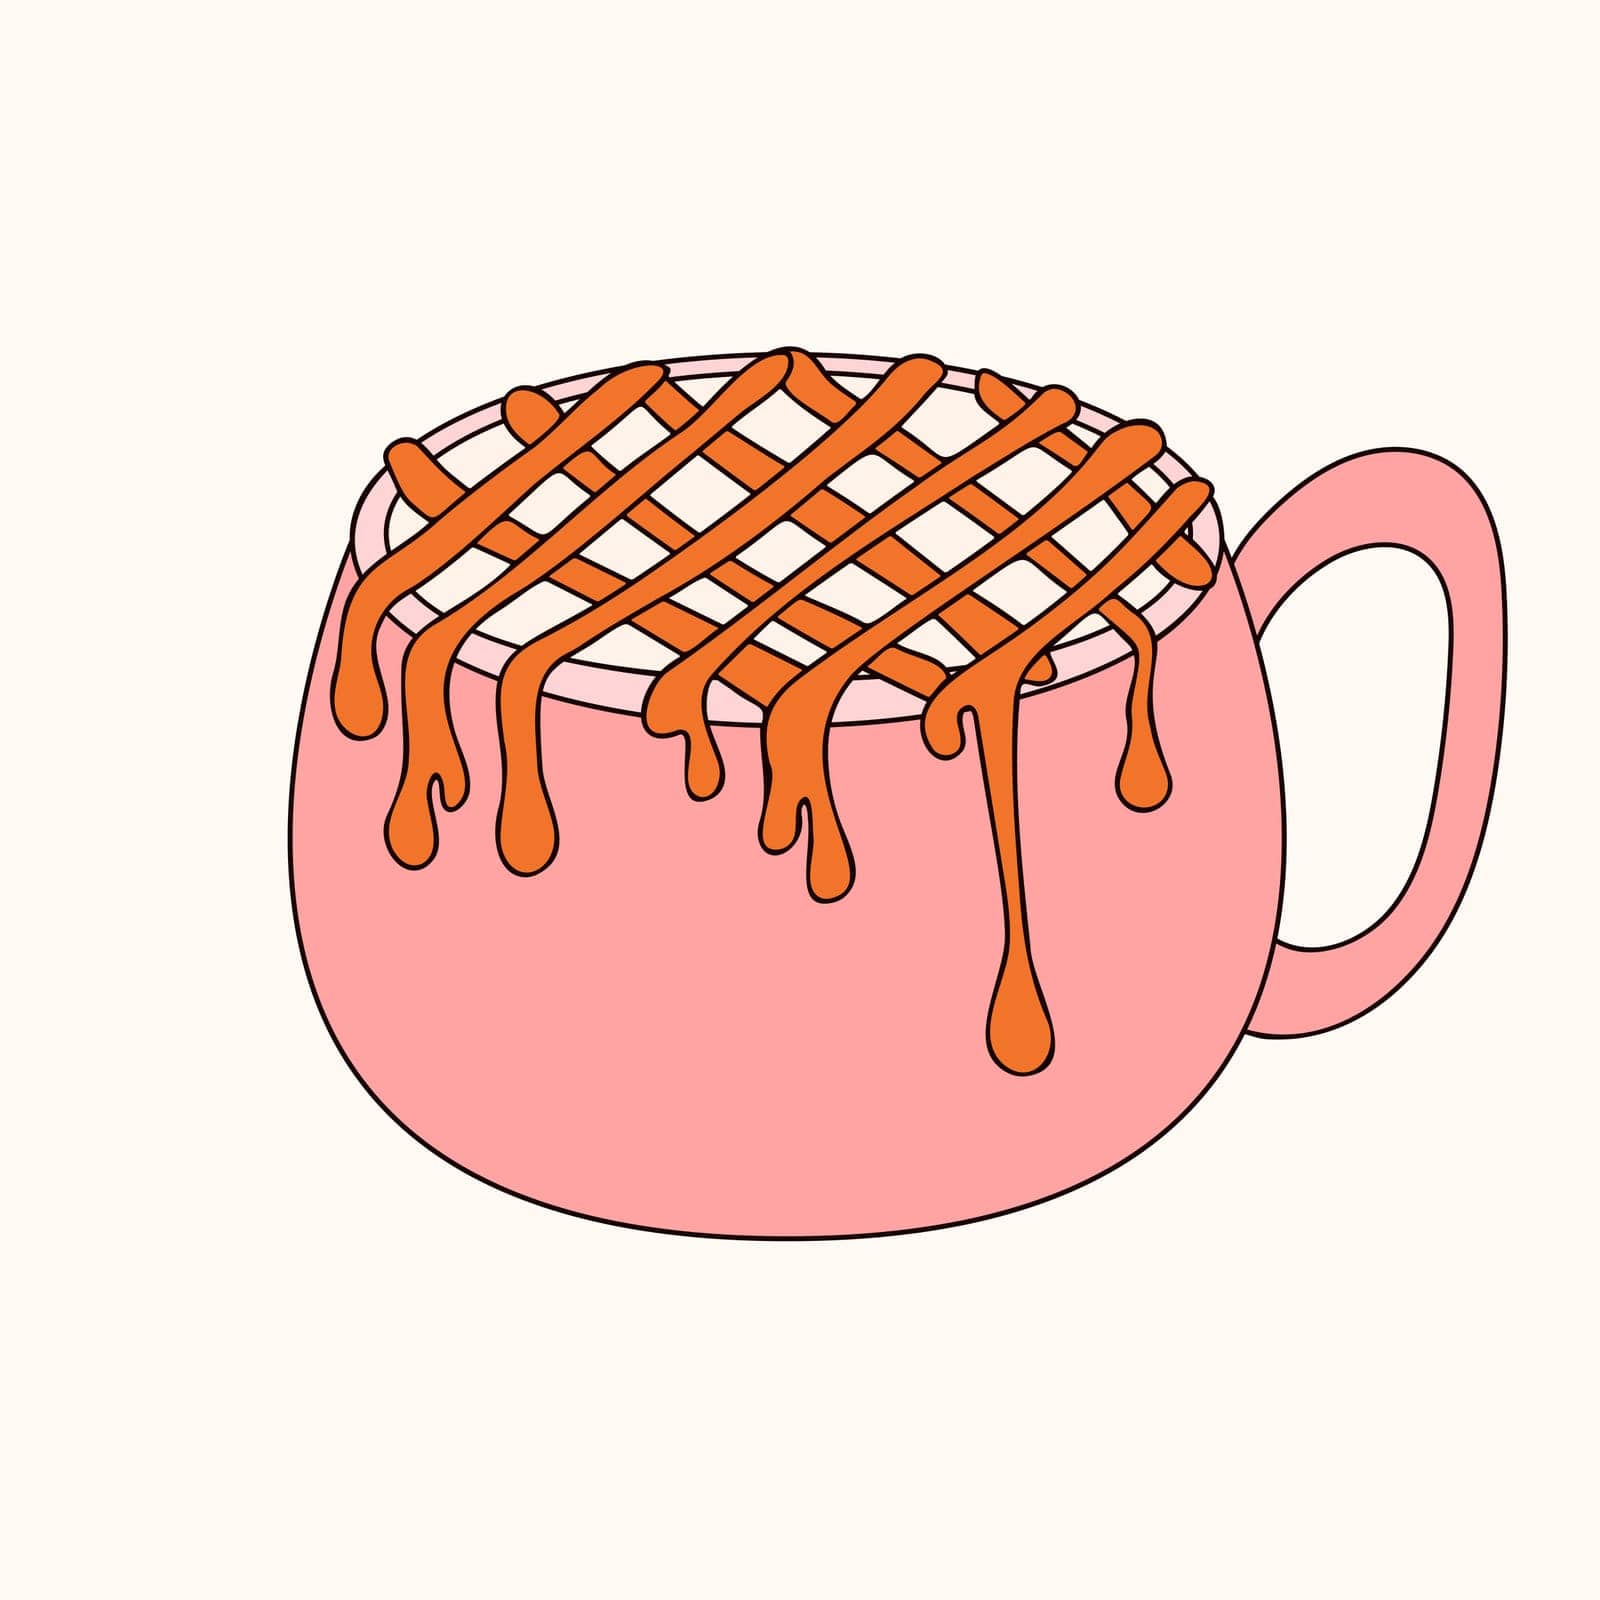 Caramel Macchiato drink in mug. Line art style. Vector illustration isolated on a white background. by IrynaShautsova